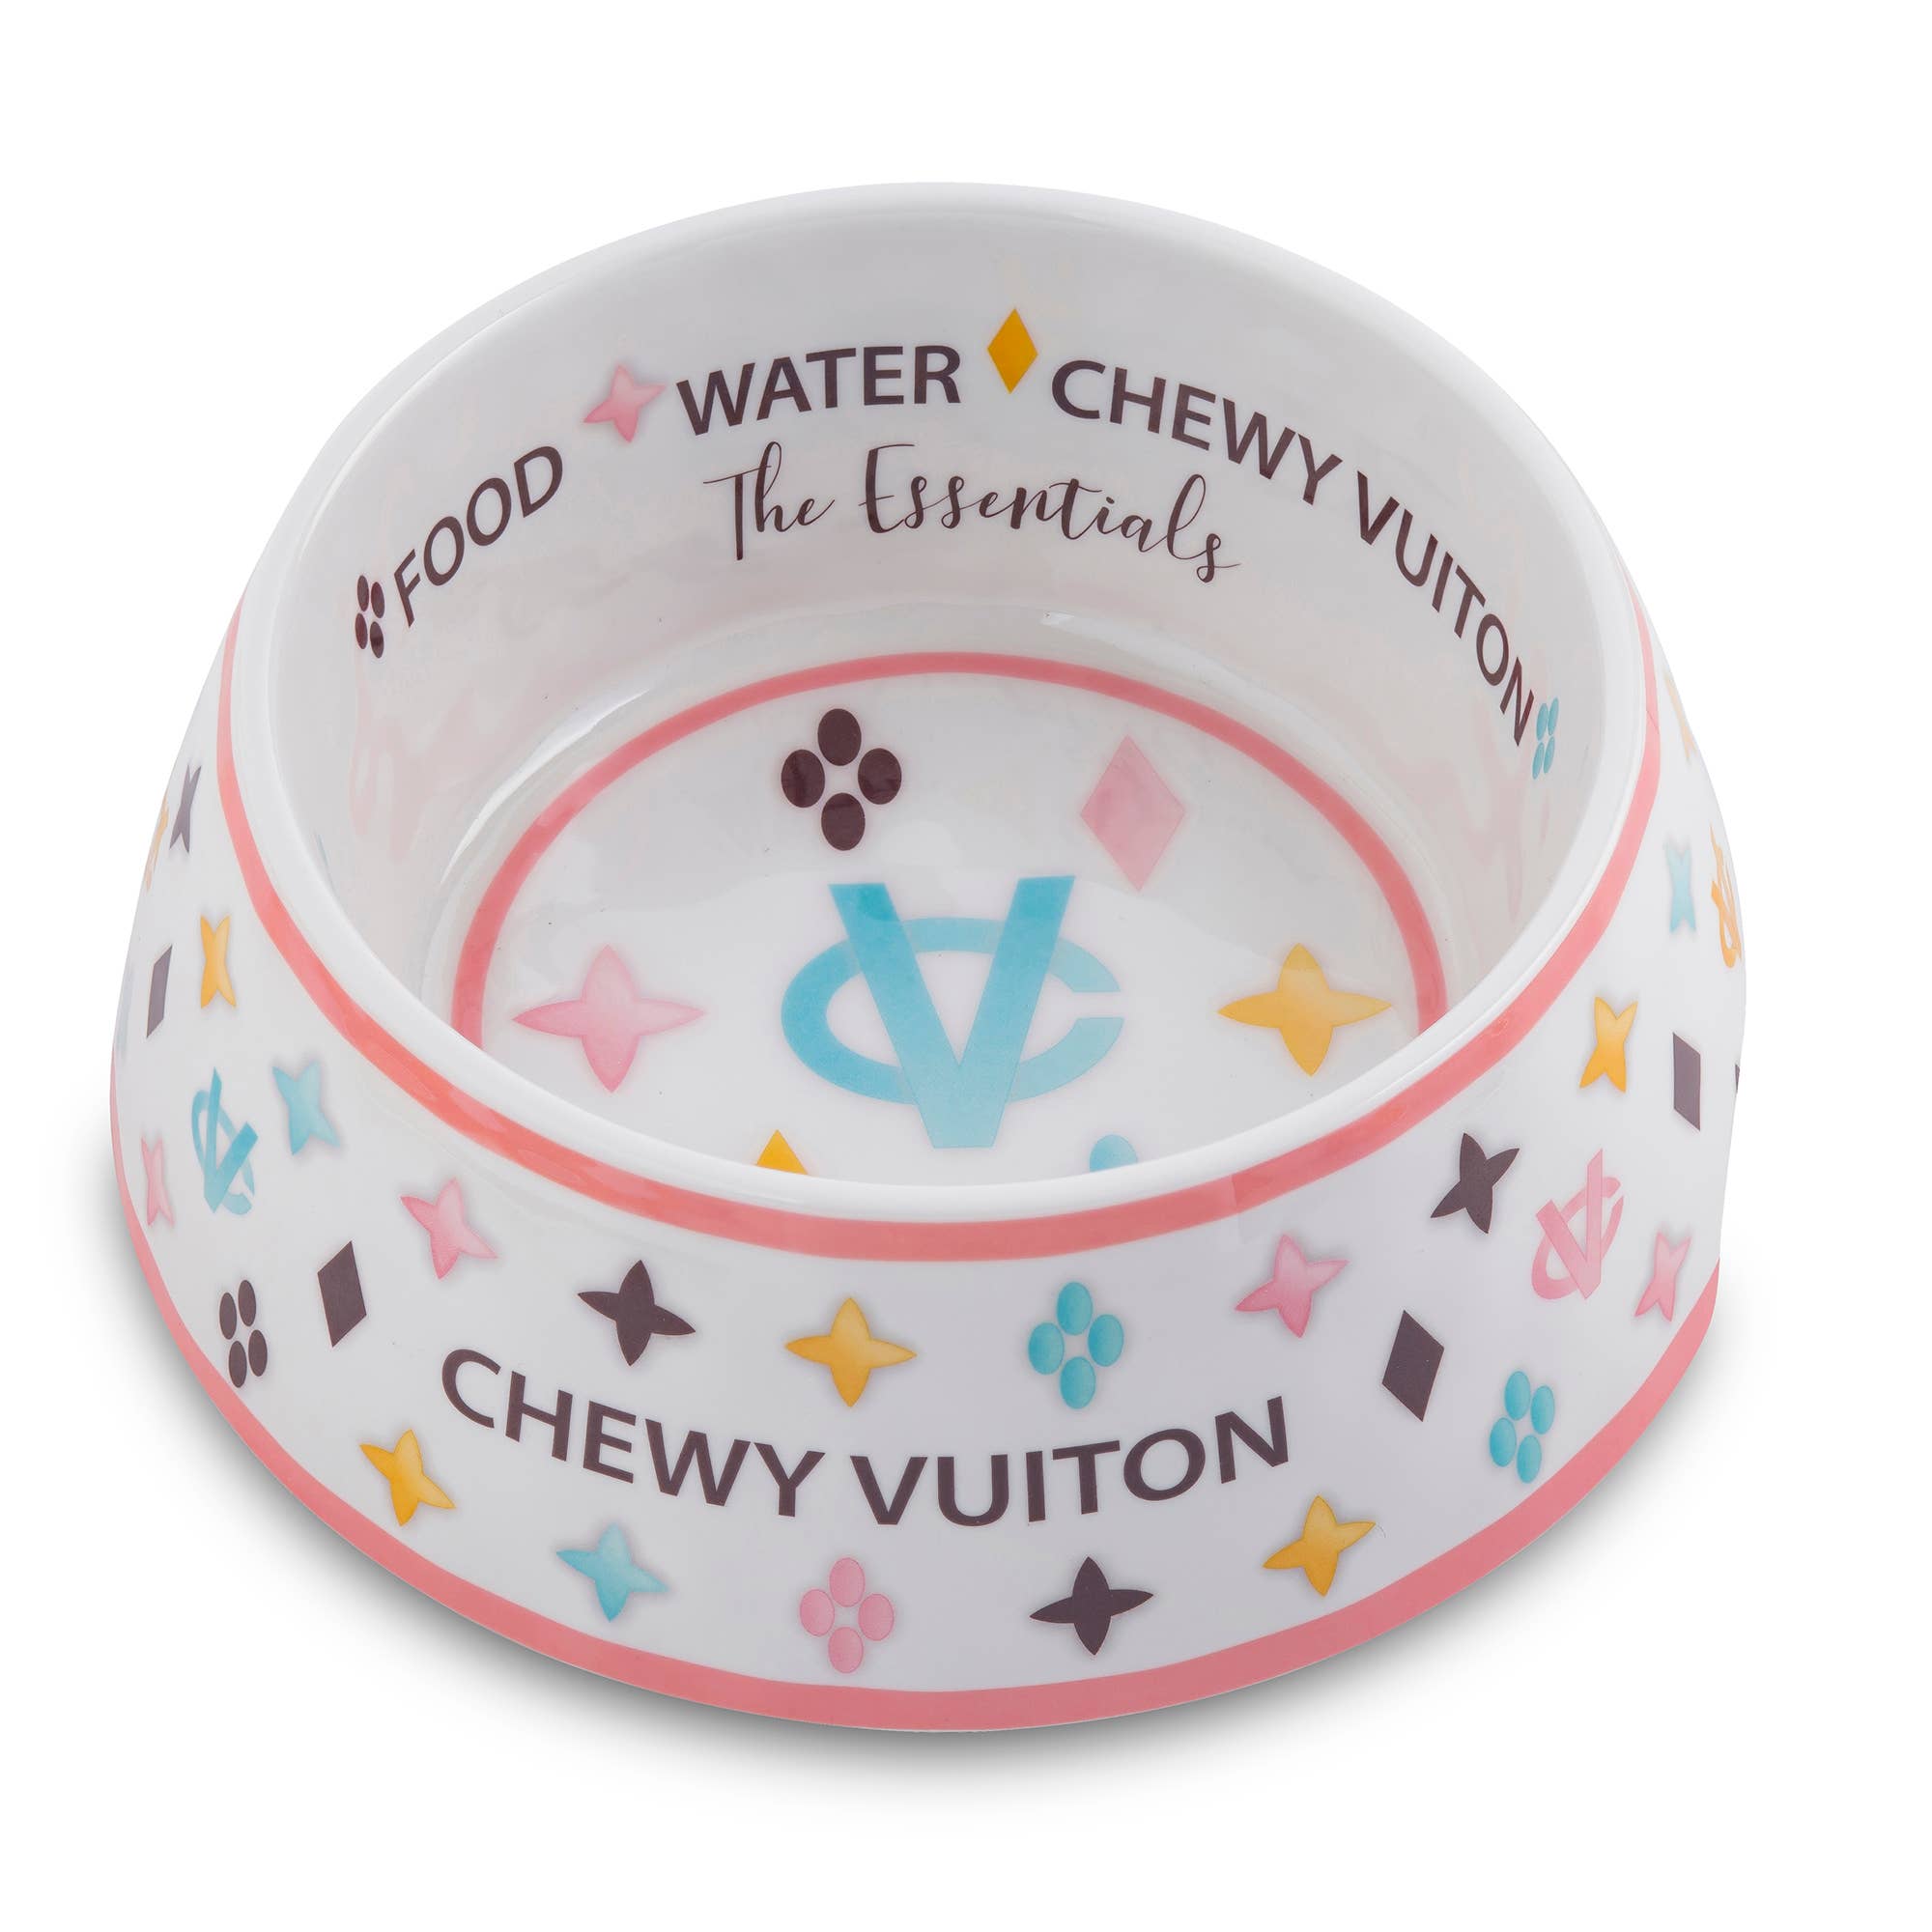 White Chewy Vuiton Dog Bowl - Glow